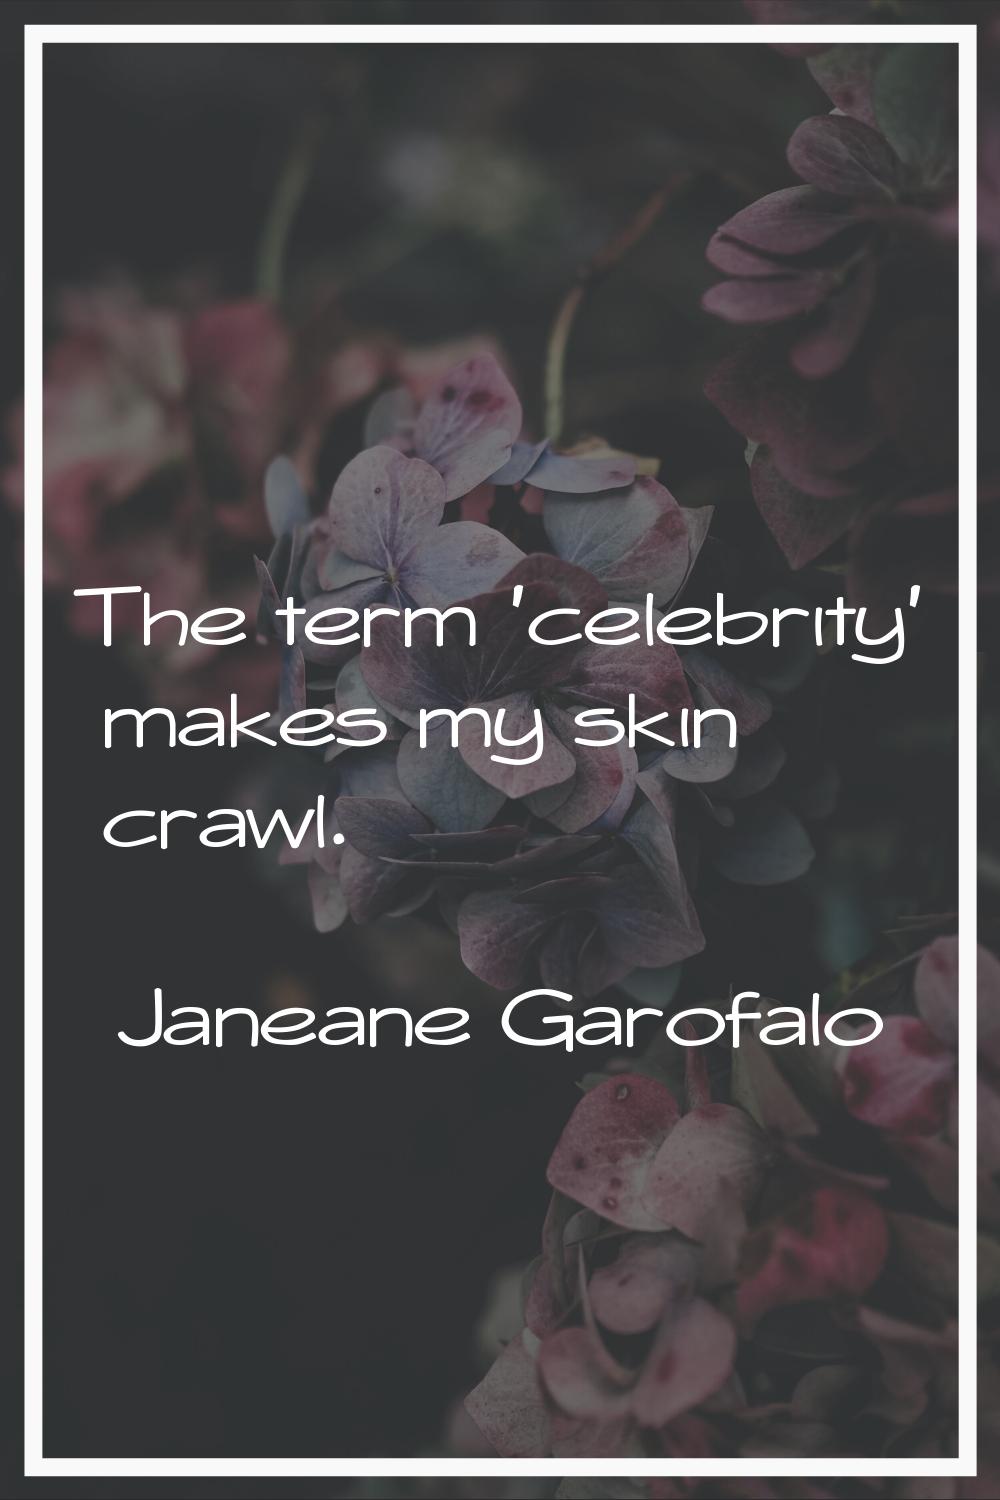 The term 'celebrity' makes my skin crawl.